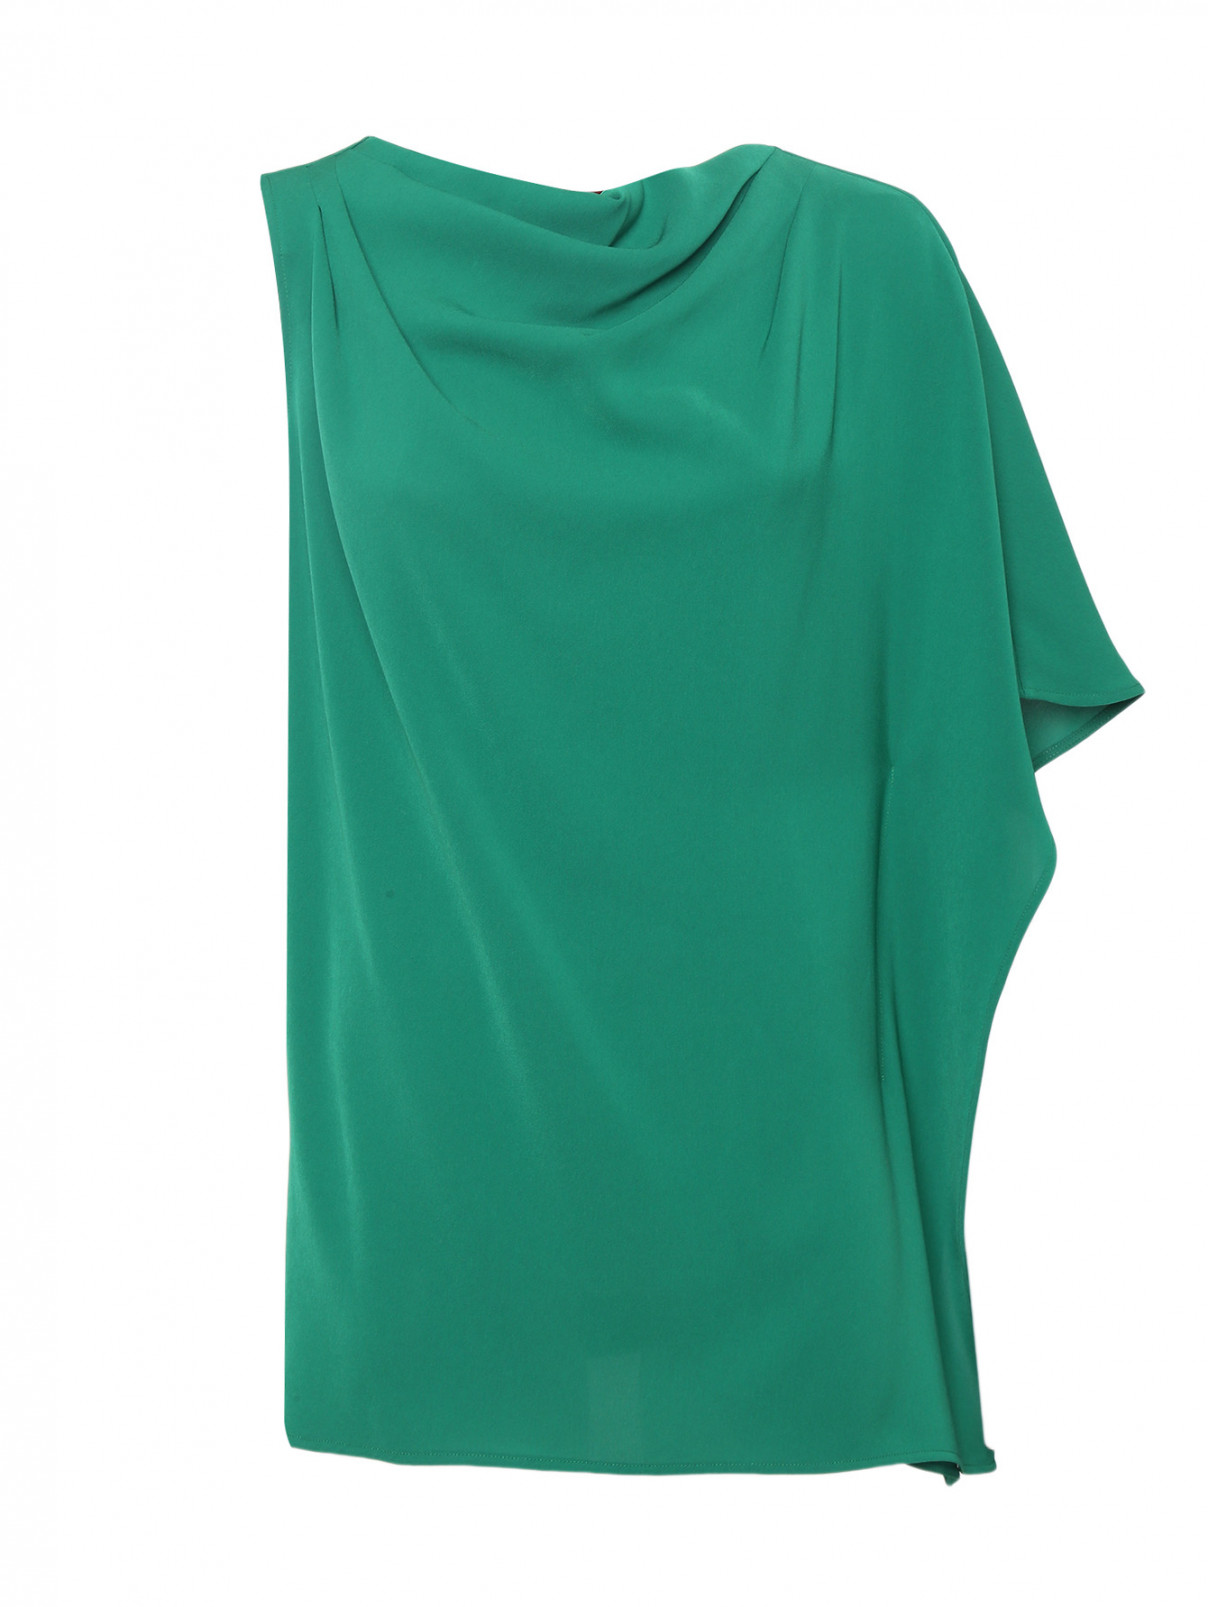 Блуза асимметричная Max Mara  –  Общий вид  – Цвет:  Зеленый